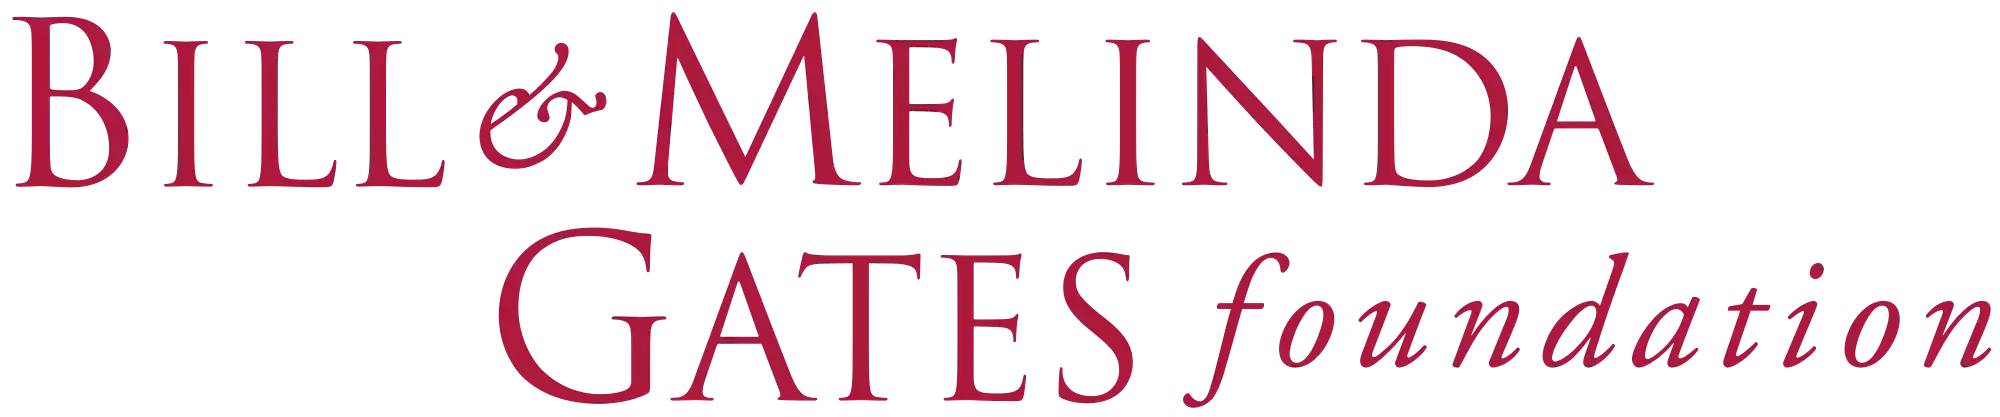 Bill-Melinda-Gates-Foundation-Logo